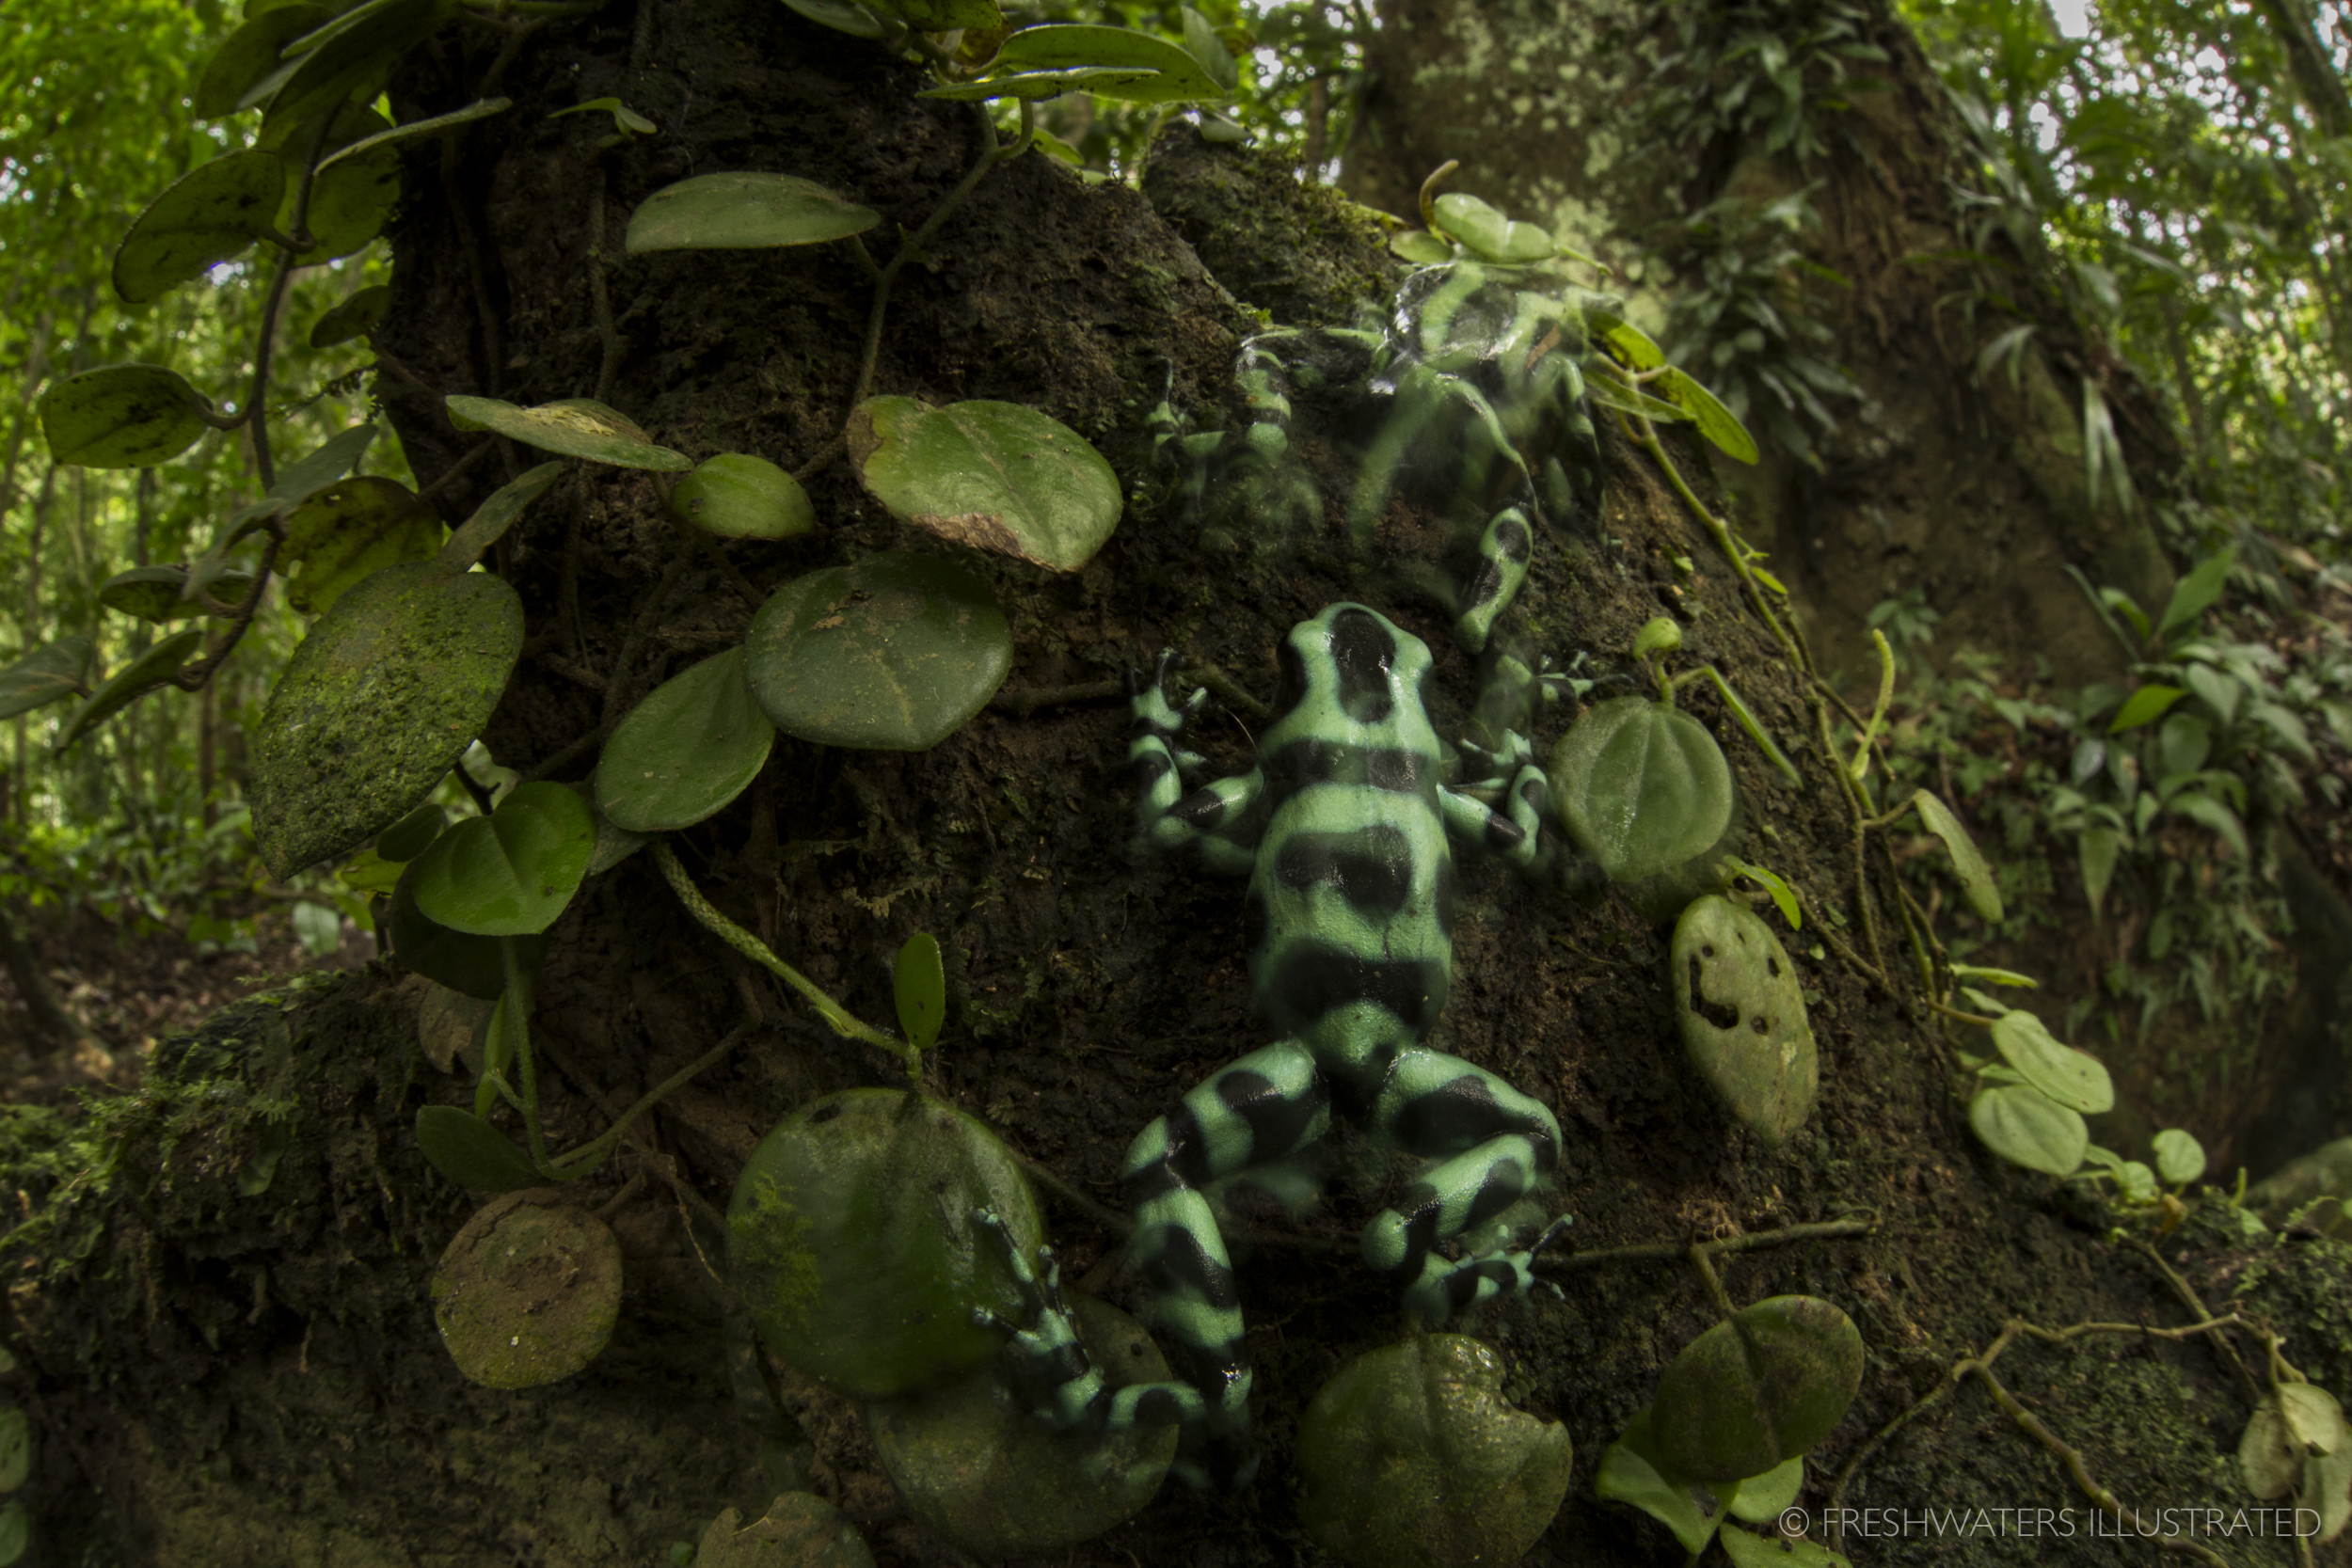  Territorial dispute between two green and black poison dart frogs (Dendrobates auratus) Talamanca, Costa Rica 